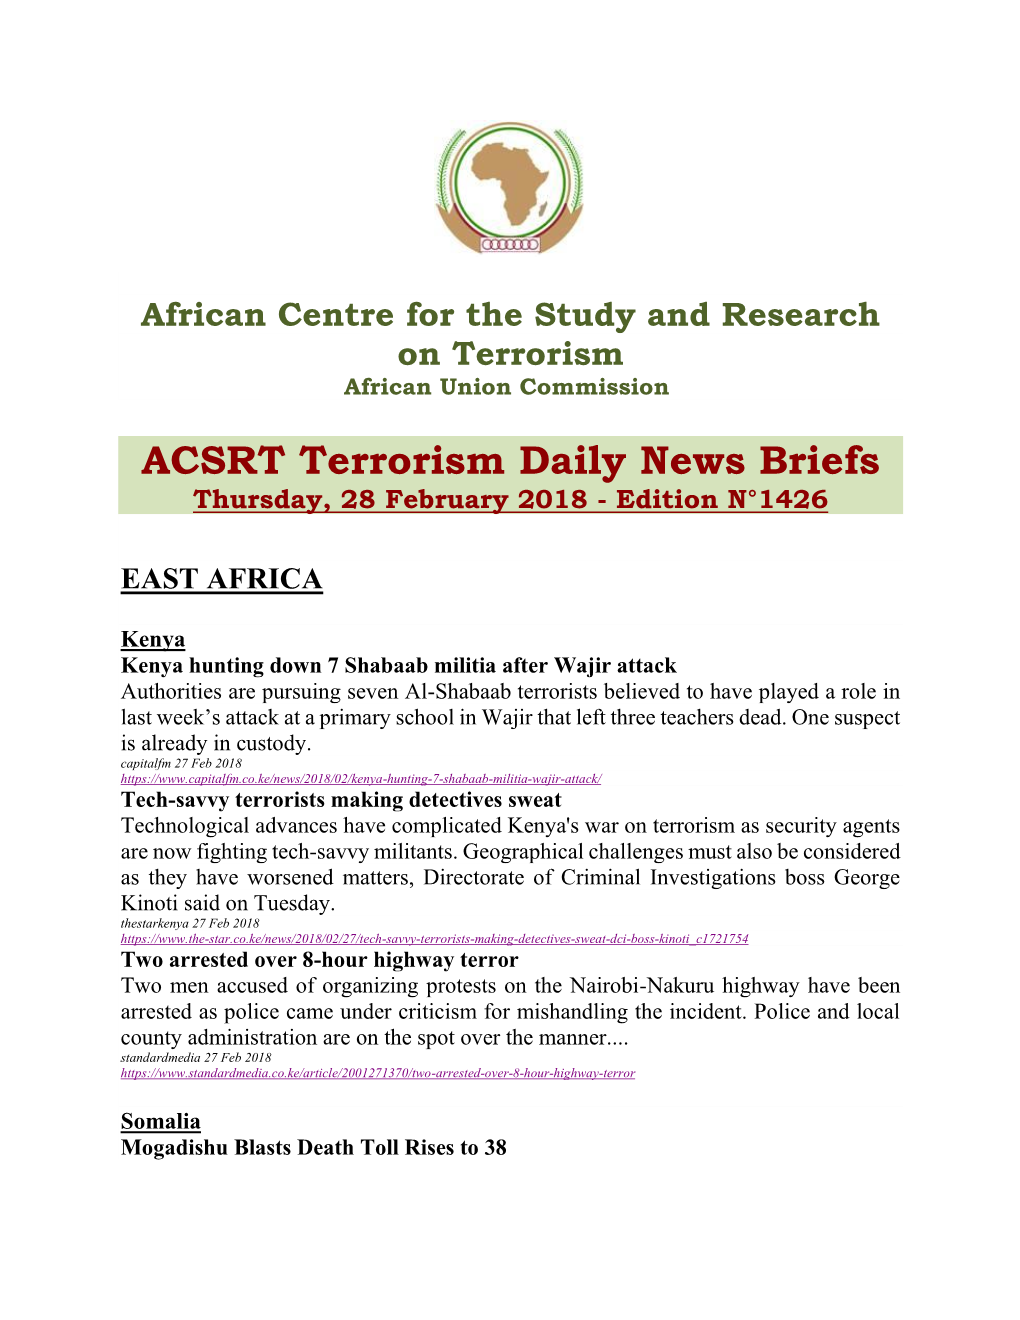 ACSRT Terrorism Daily News Briefs Thursday, 28 February 2018 - Edition N°1426